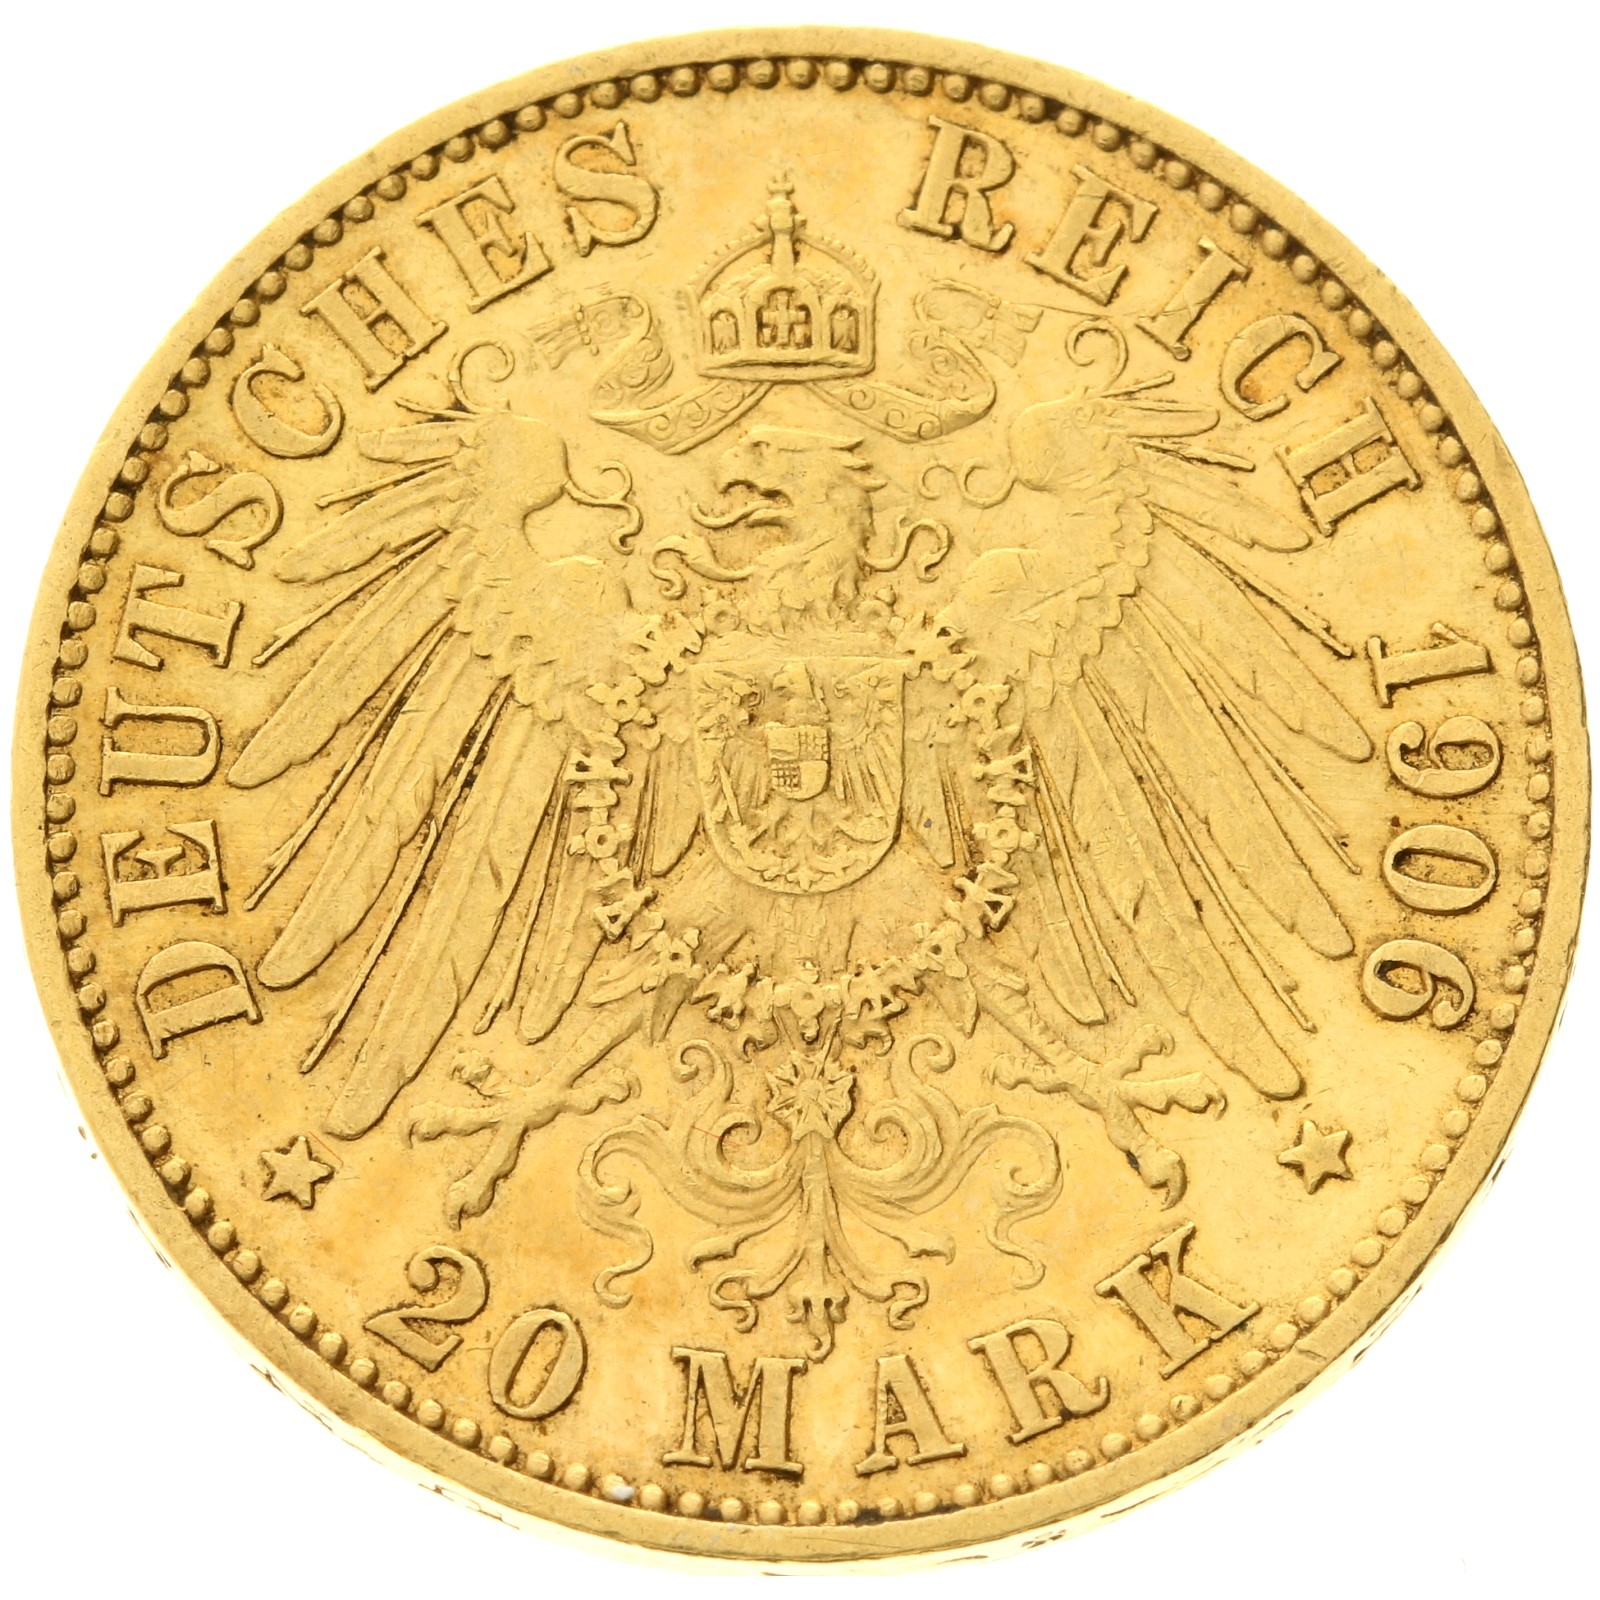 Germany - Prussia - 20 mark - 1906 - A - Wilhelm II